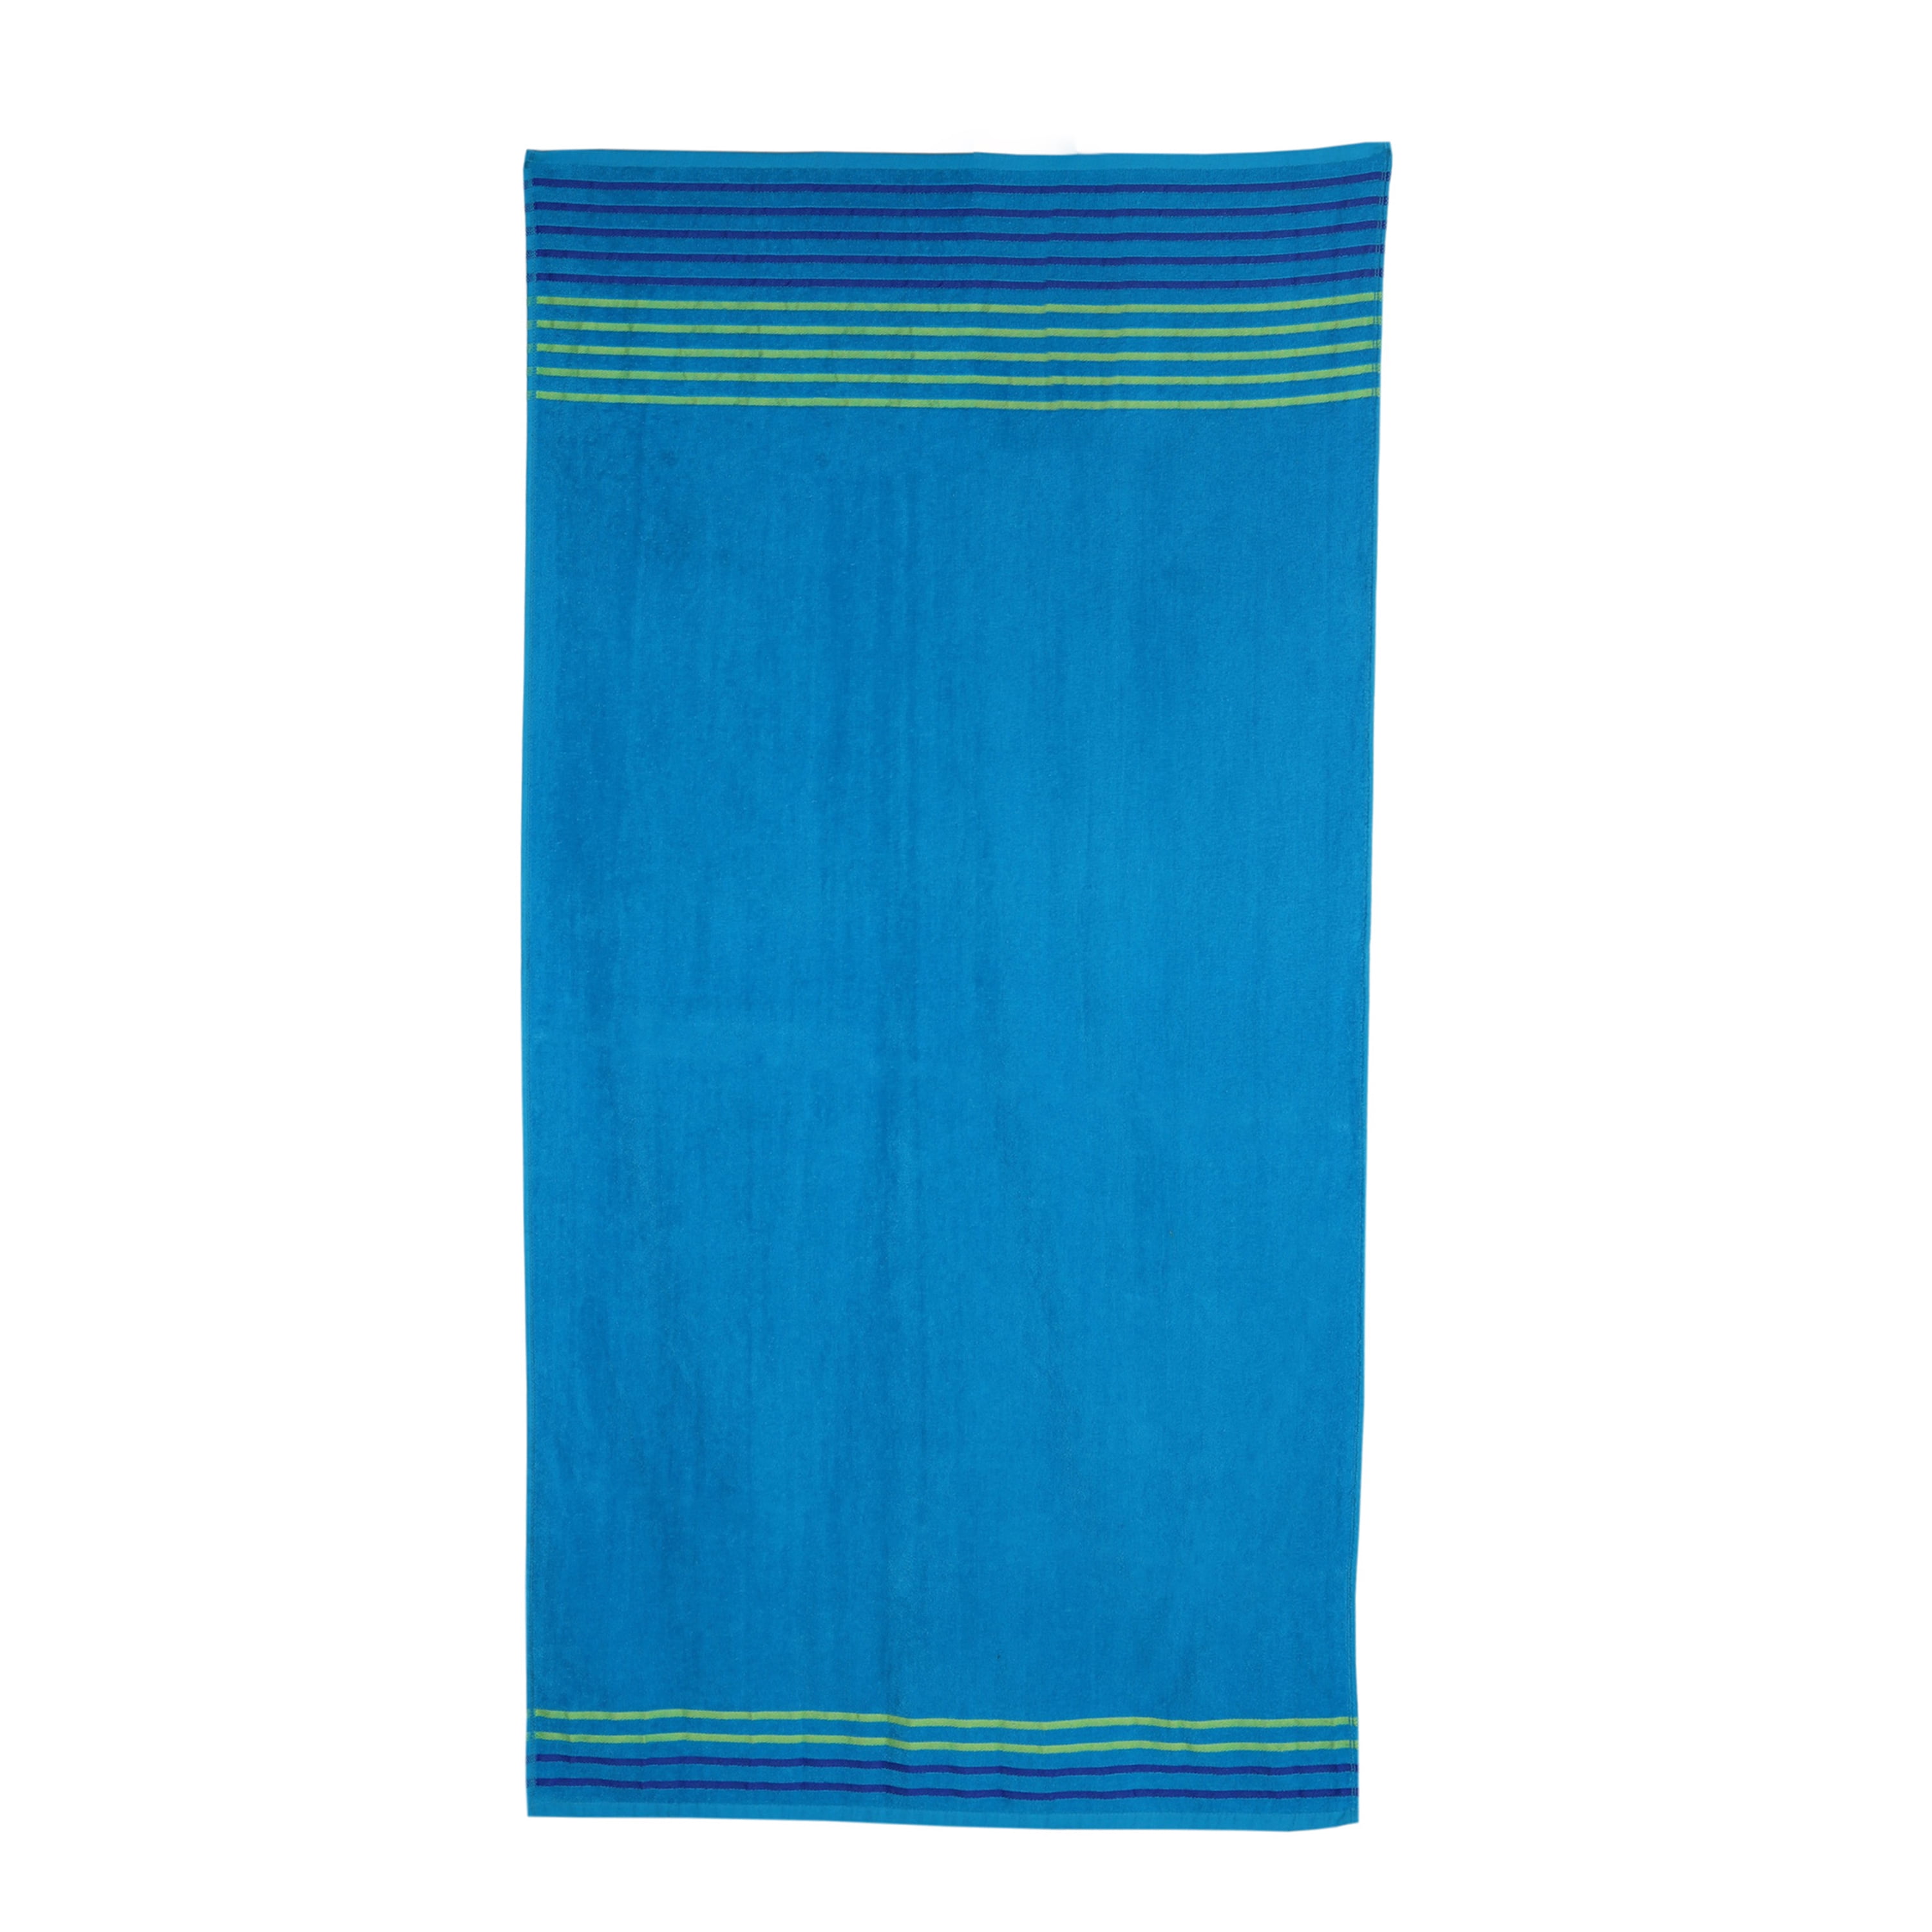 Mainstays Beach Towel, Teal Weft Stripe, 28x60